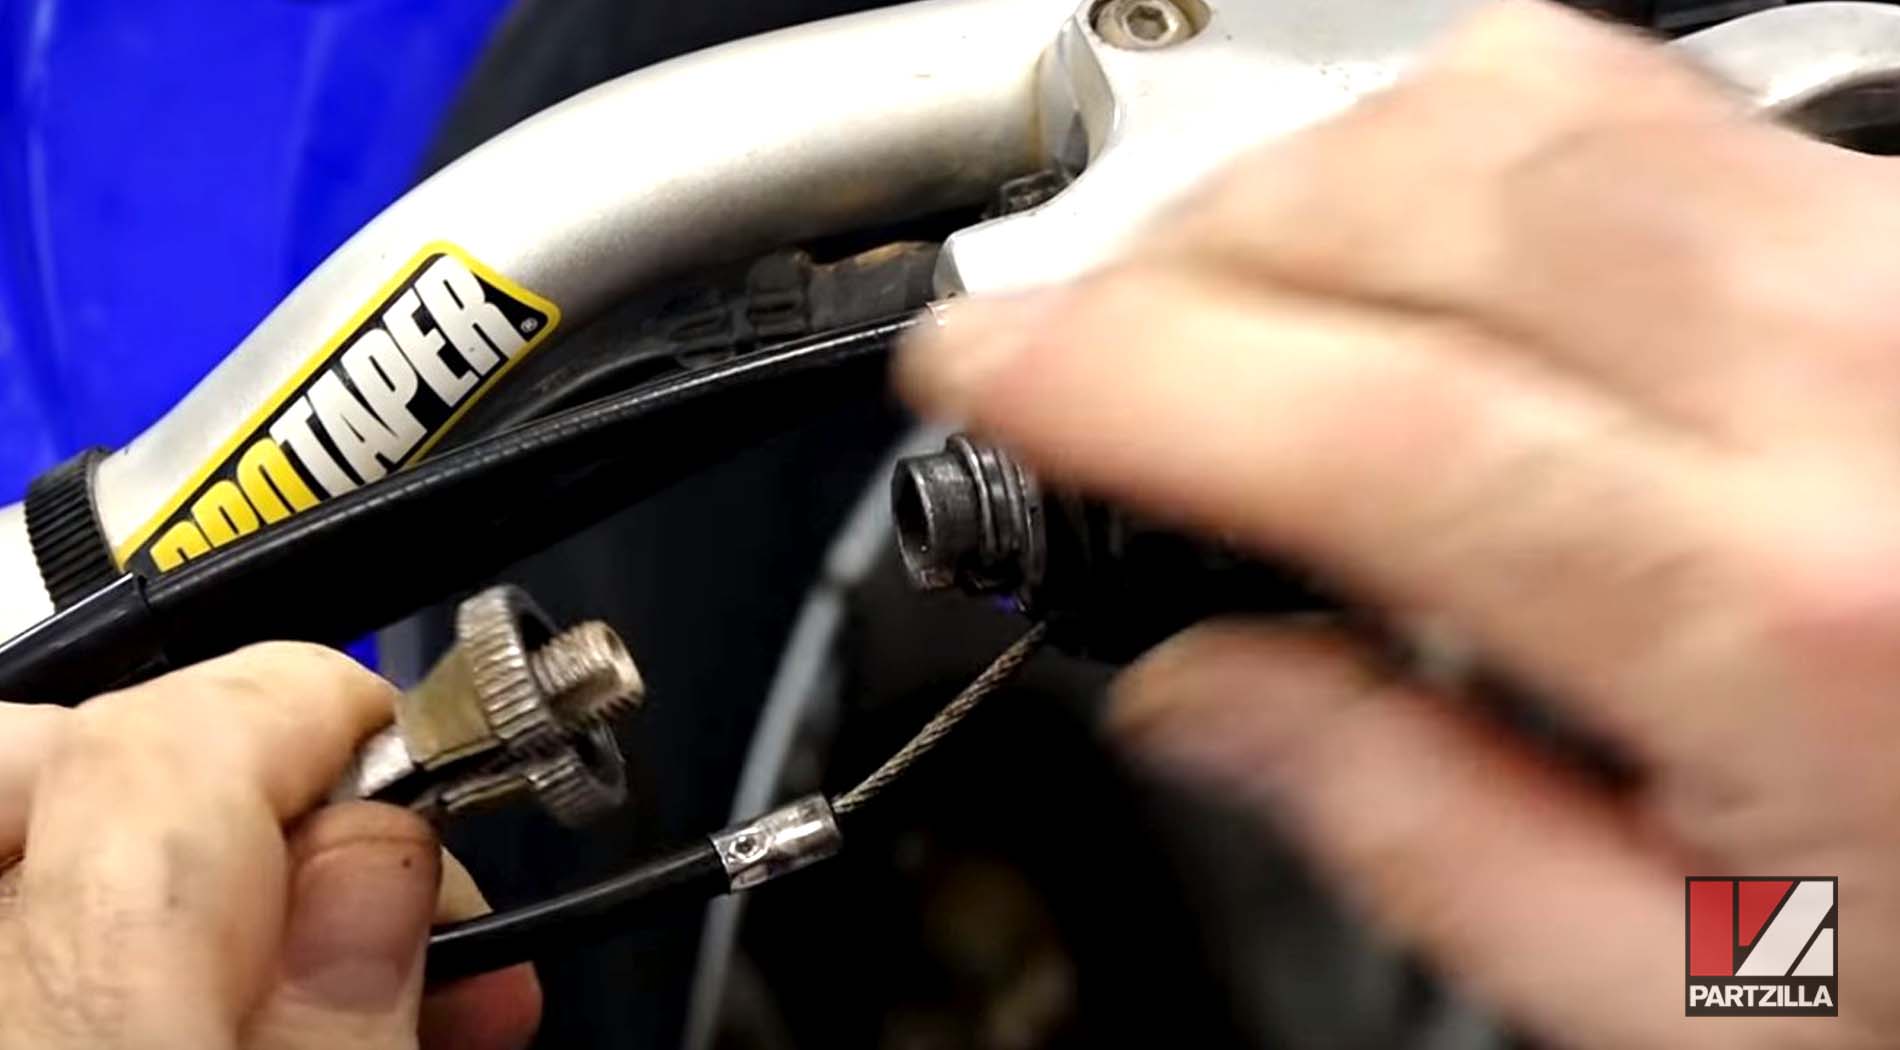 Yamaha ATV Clutch Cable Replacement | Partzilla.com